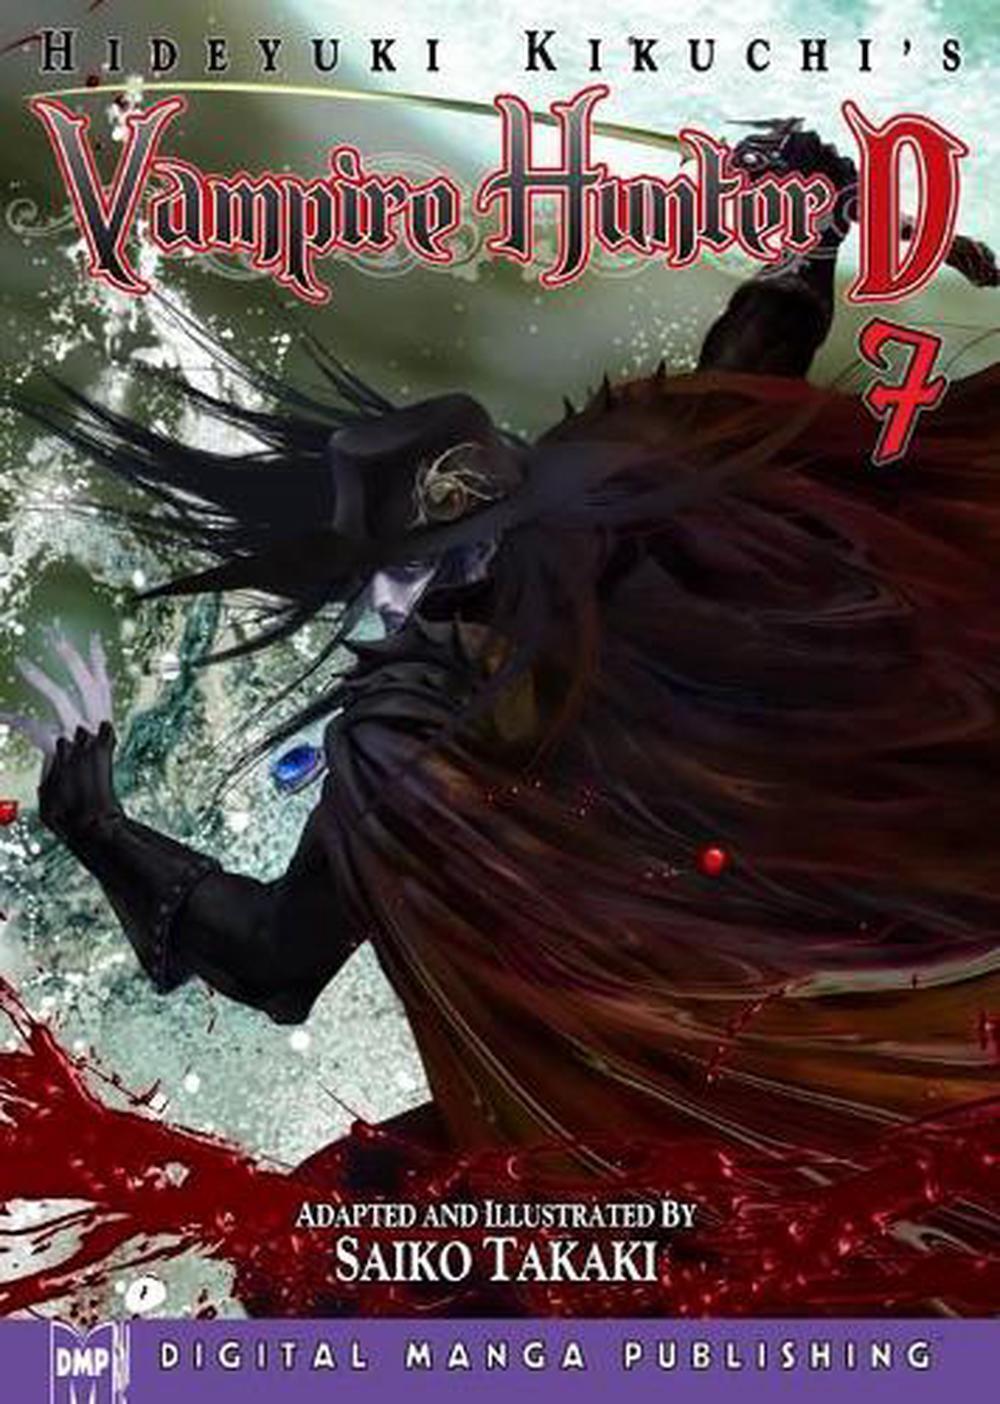 Hideyuki Kikuchi's Vampire Hunter D Volume 7 by Hideyuki Kikuchi (English) Paper